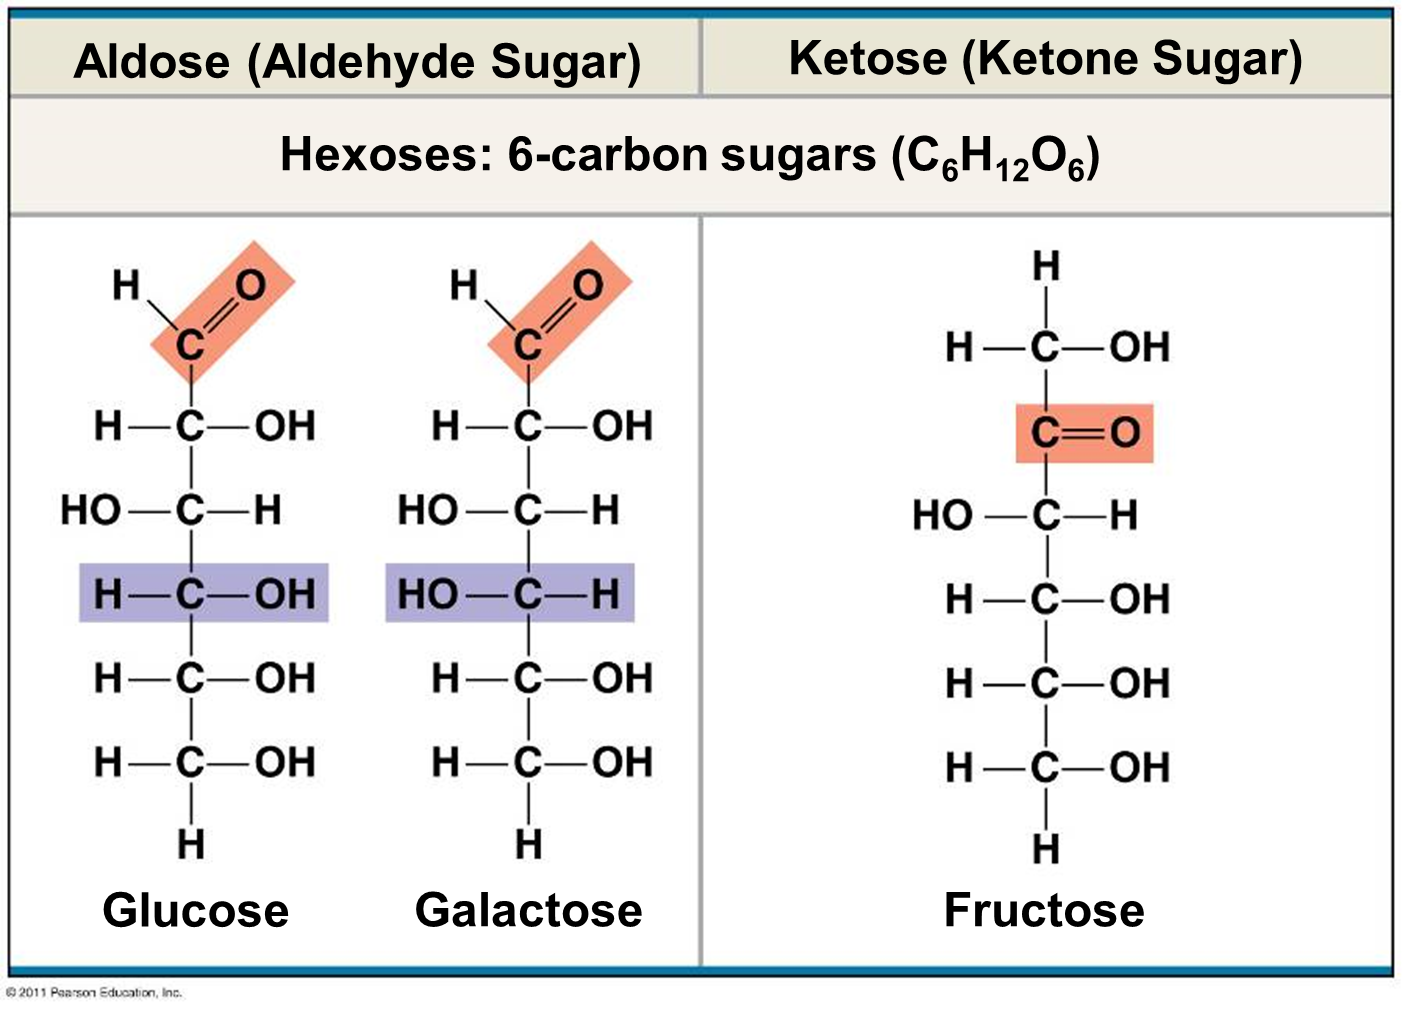 Фруктоза селиванова. Classification and structure of monosaccharides.. Glucose Sugar. Фруктоза o2. Hexoses.